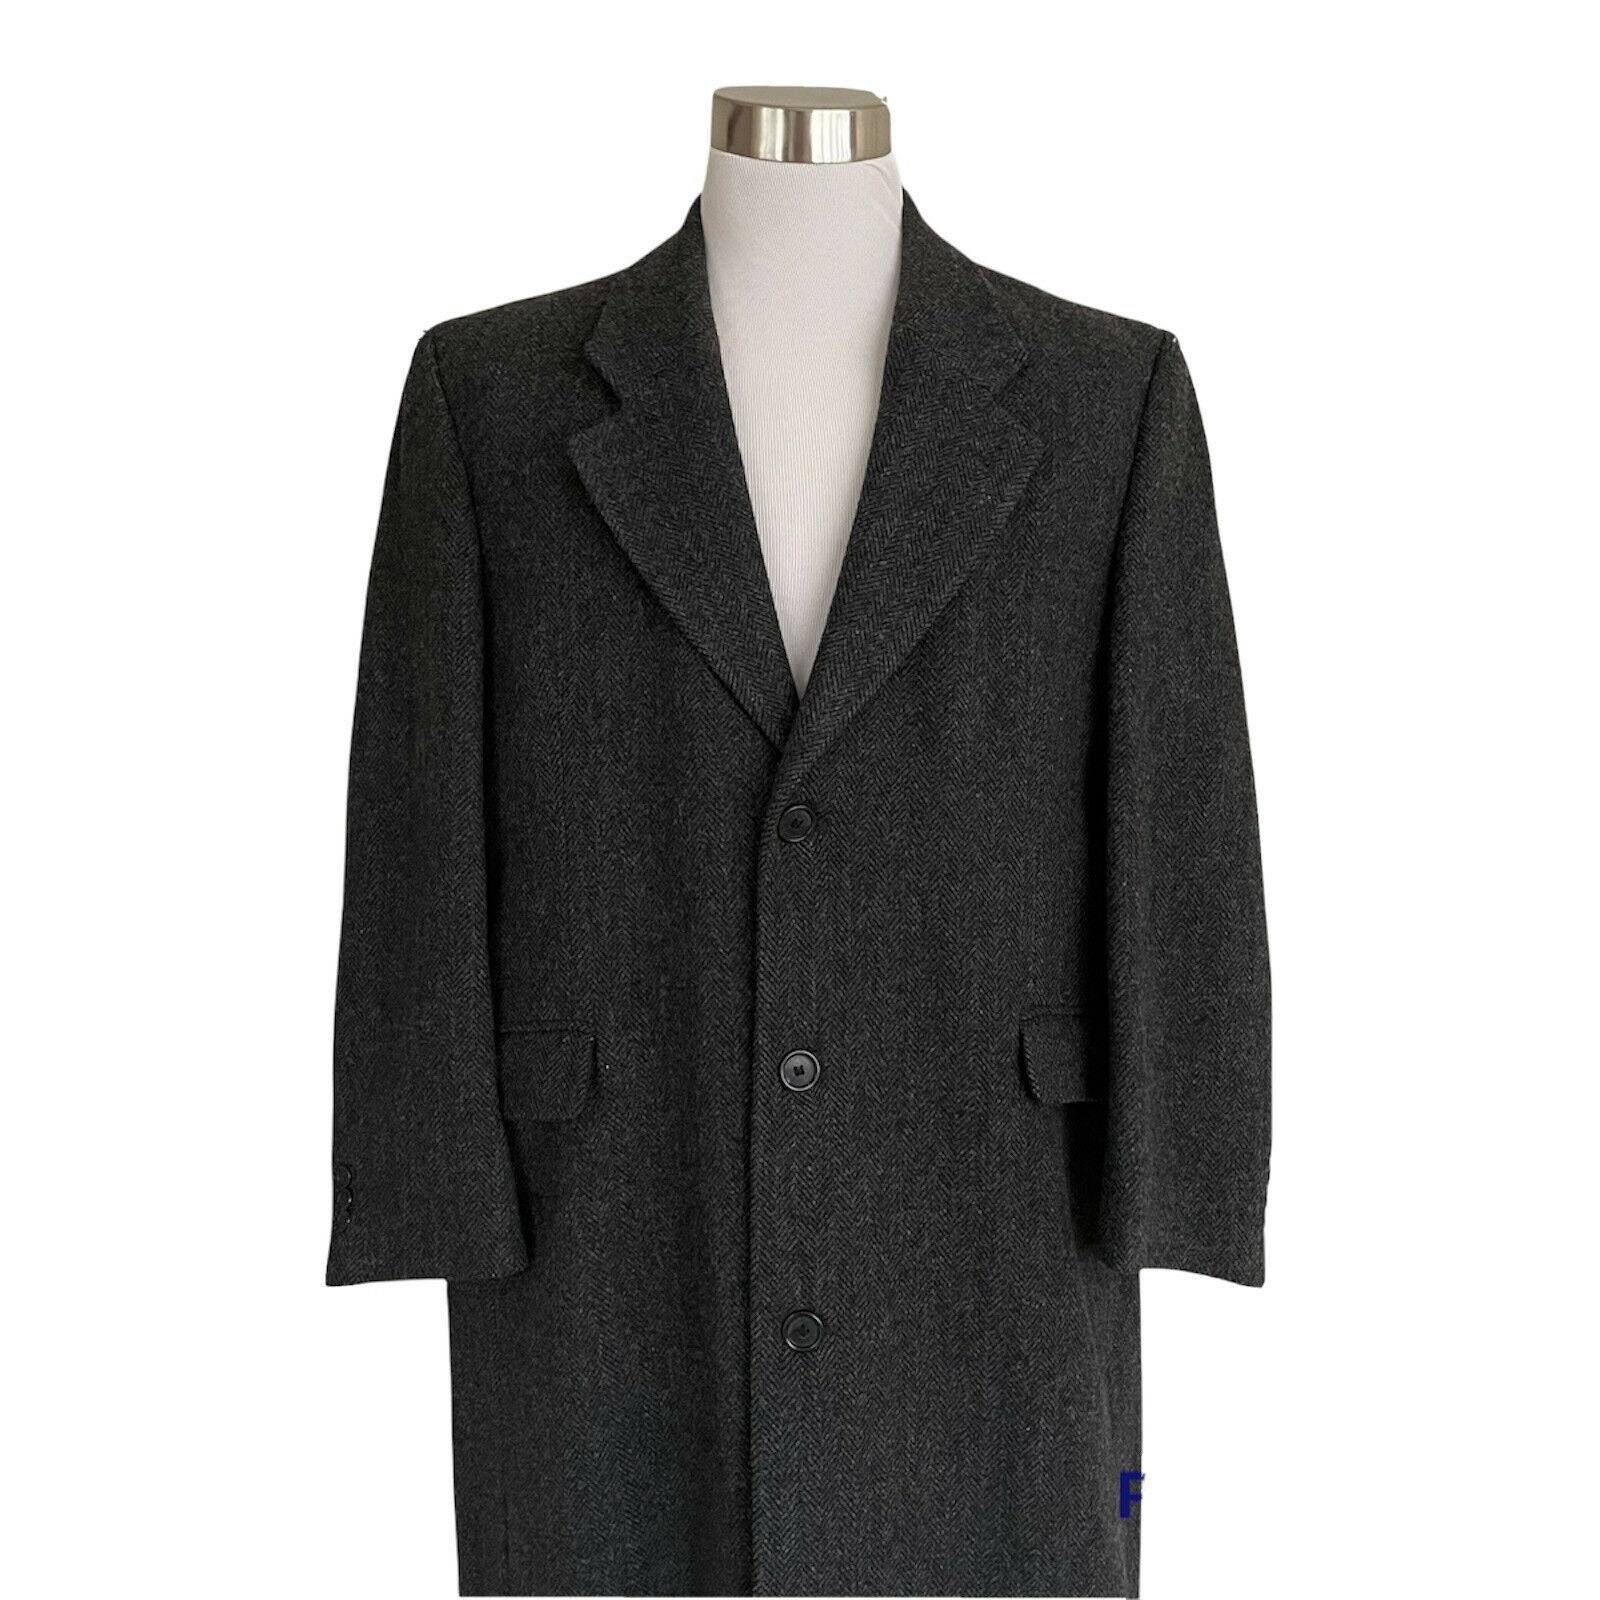 Vintage 1970s Tandy Leather Men's Top Coat Jacket Sewing Pattern UNCUT Size  38 